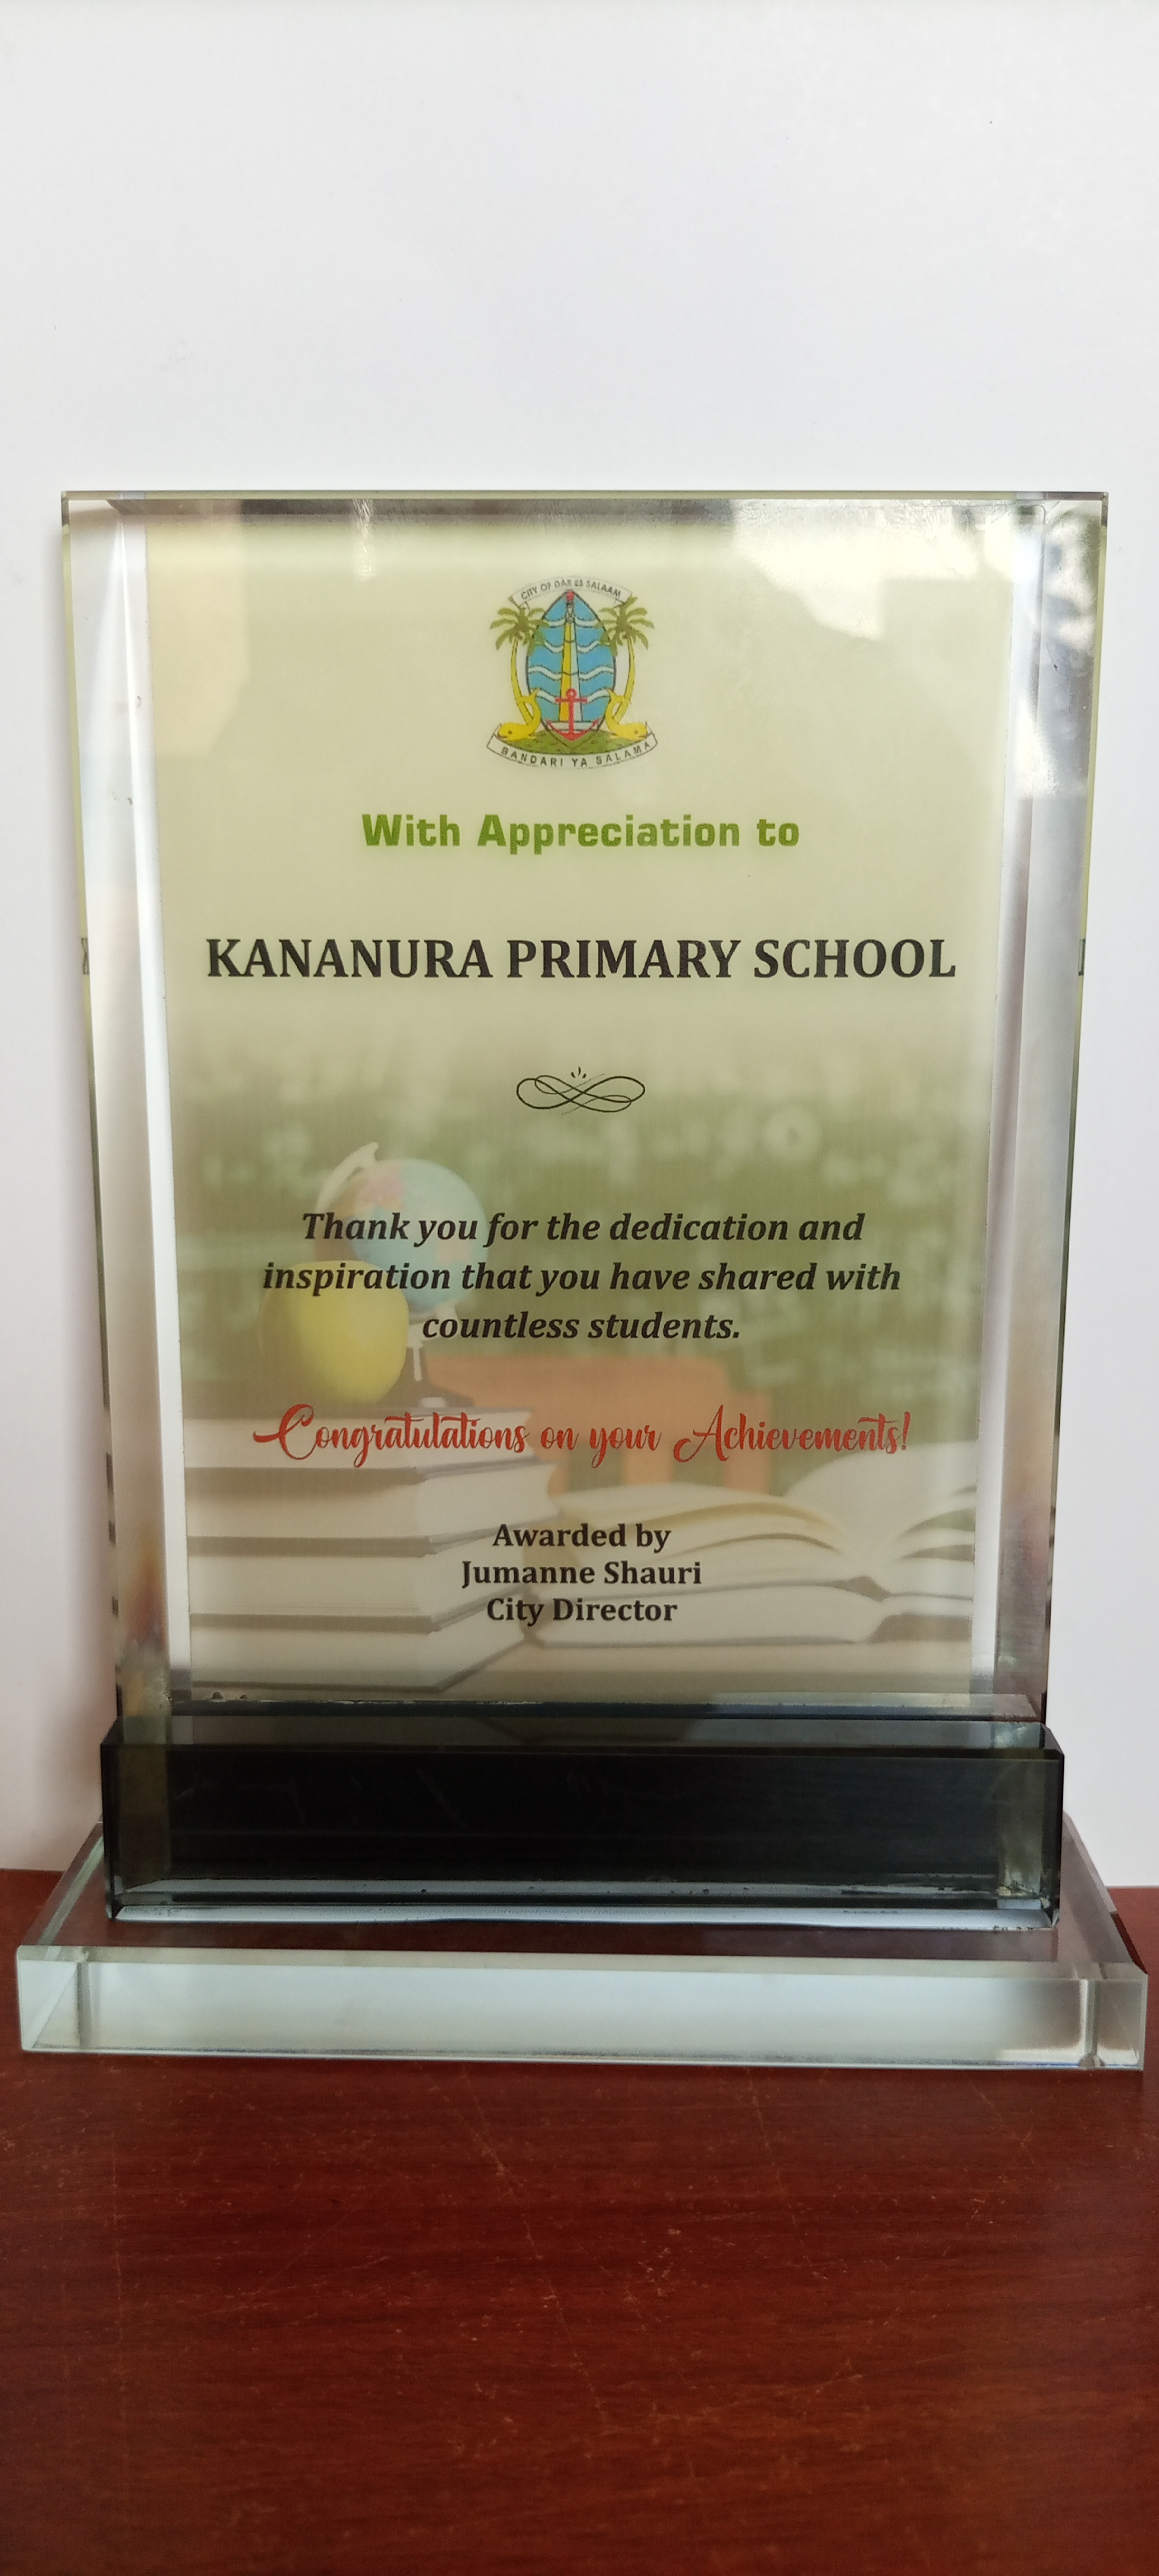 Appreciation to kananura school